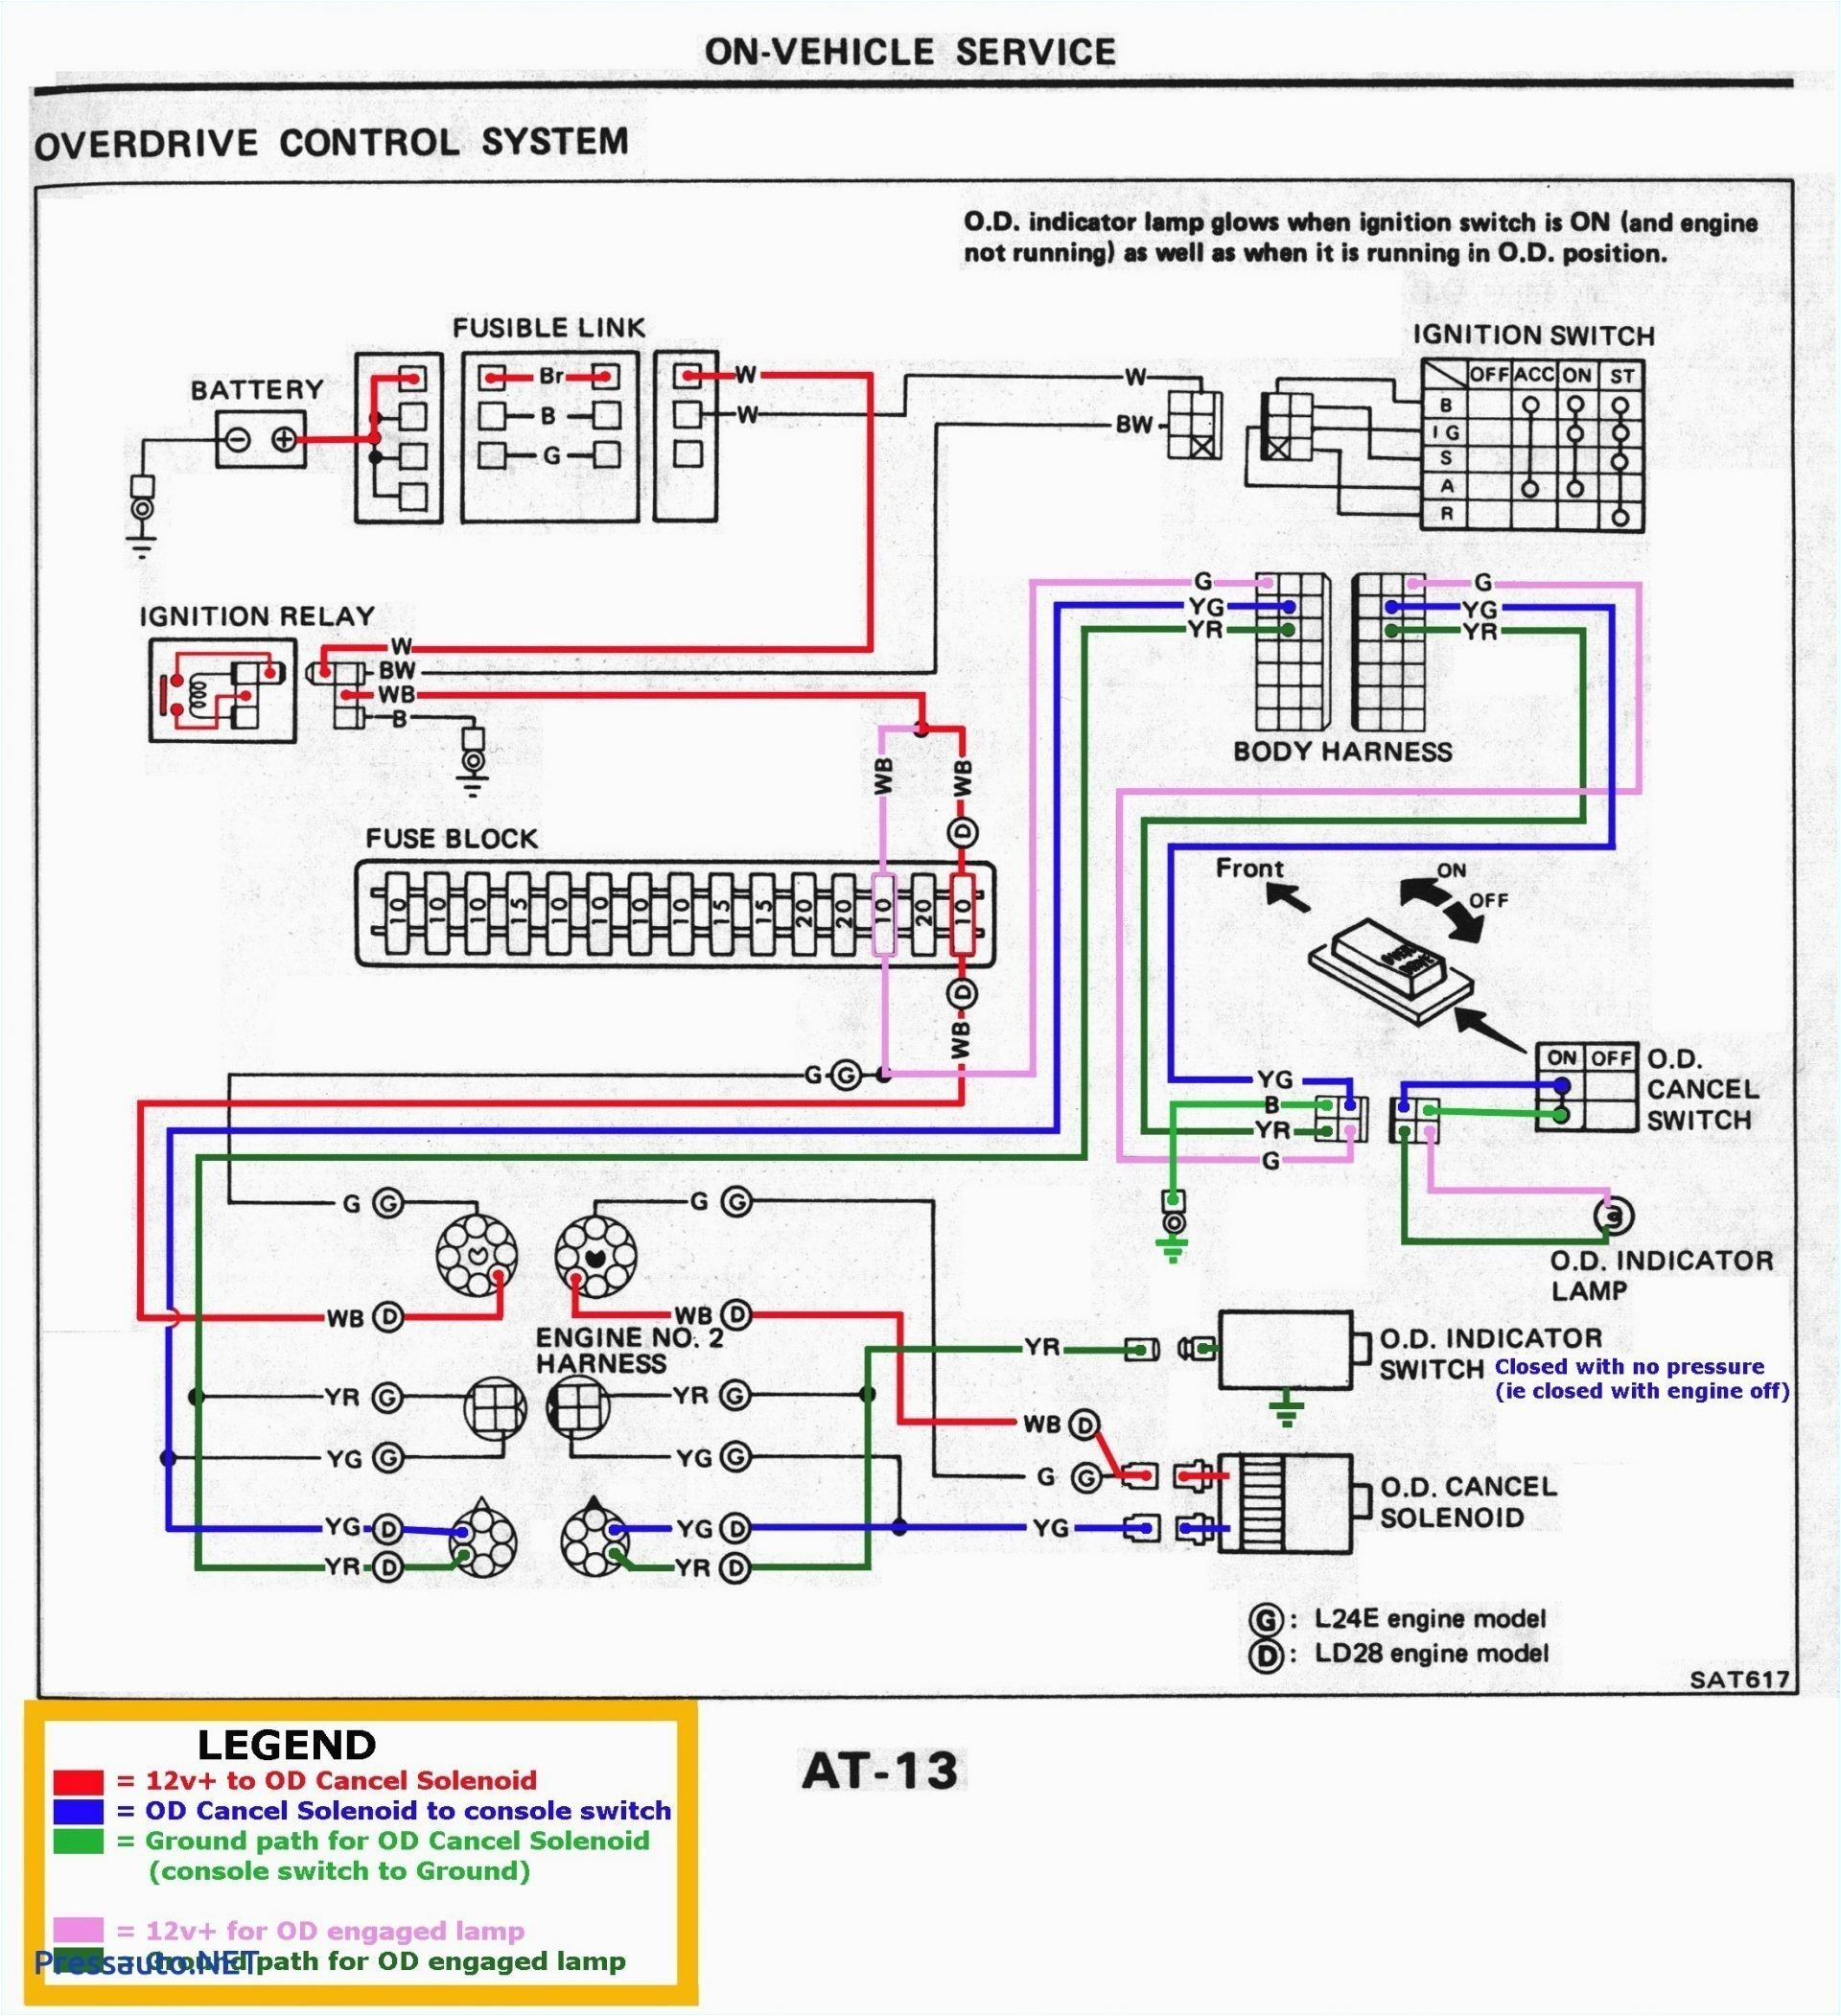 car alarm wiring diagram best of golf 4 cabriolet avis archives feefee inspirationa golf 4 alarm photograph of car alarm wiring diagram jpg